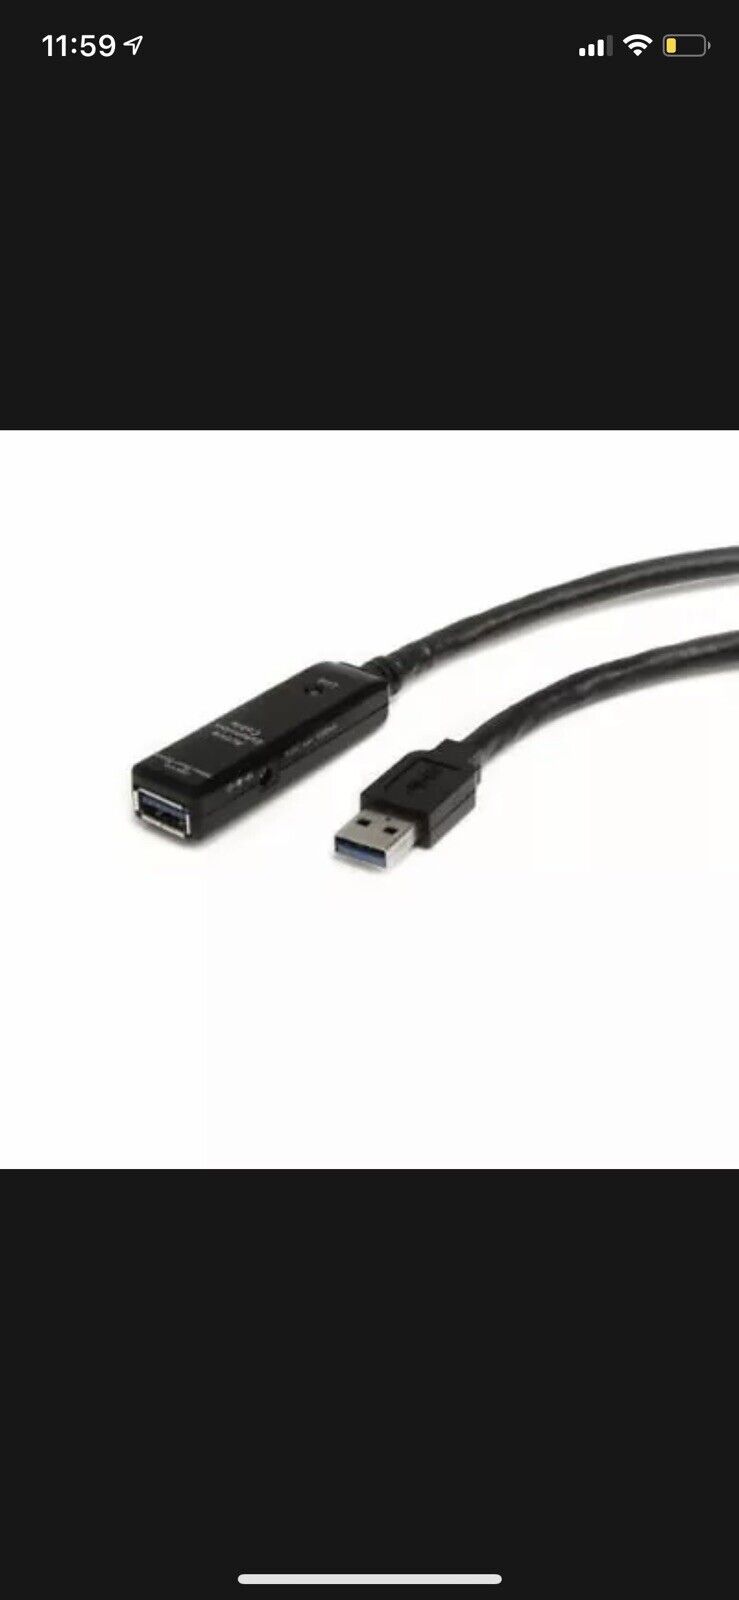 StarTech.com 3m USB 3.0 Active Extension Cable - M/F - USB - 9.84 ft 1 Pack